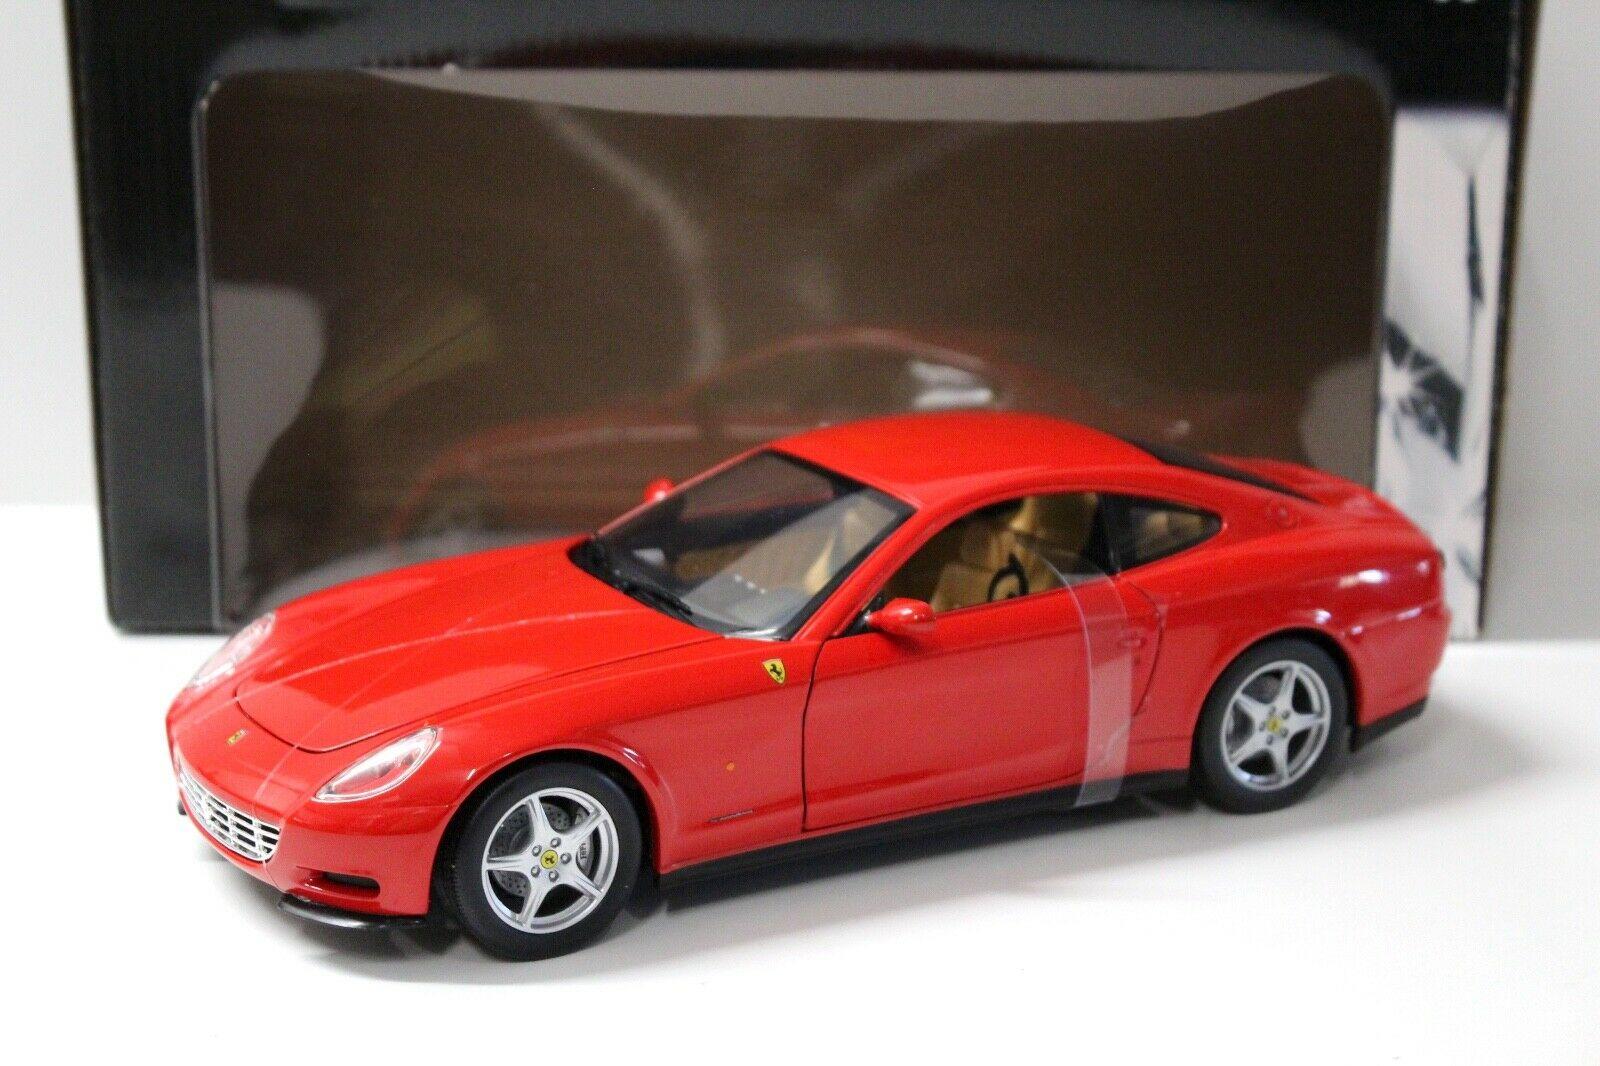 1:18 Hot Wheels Ferrari 612 Scaglietti red